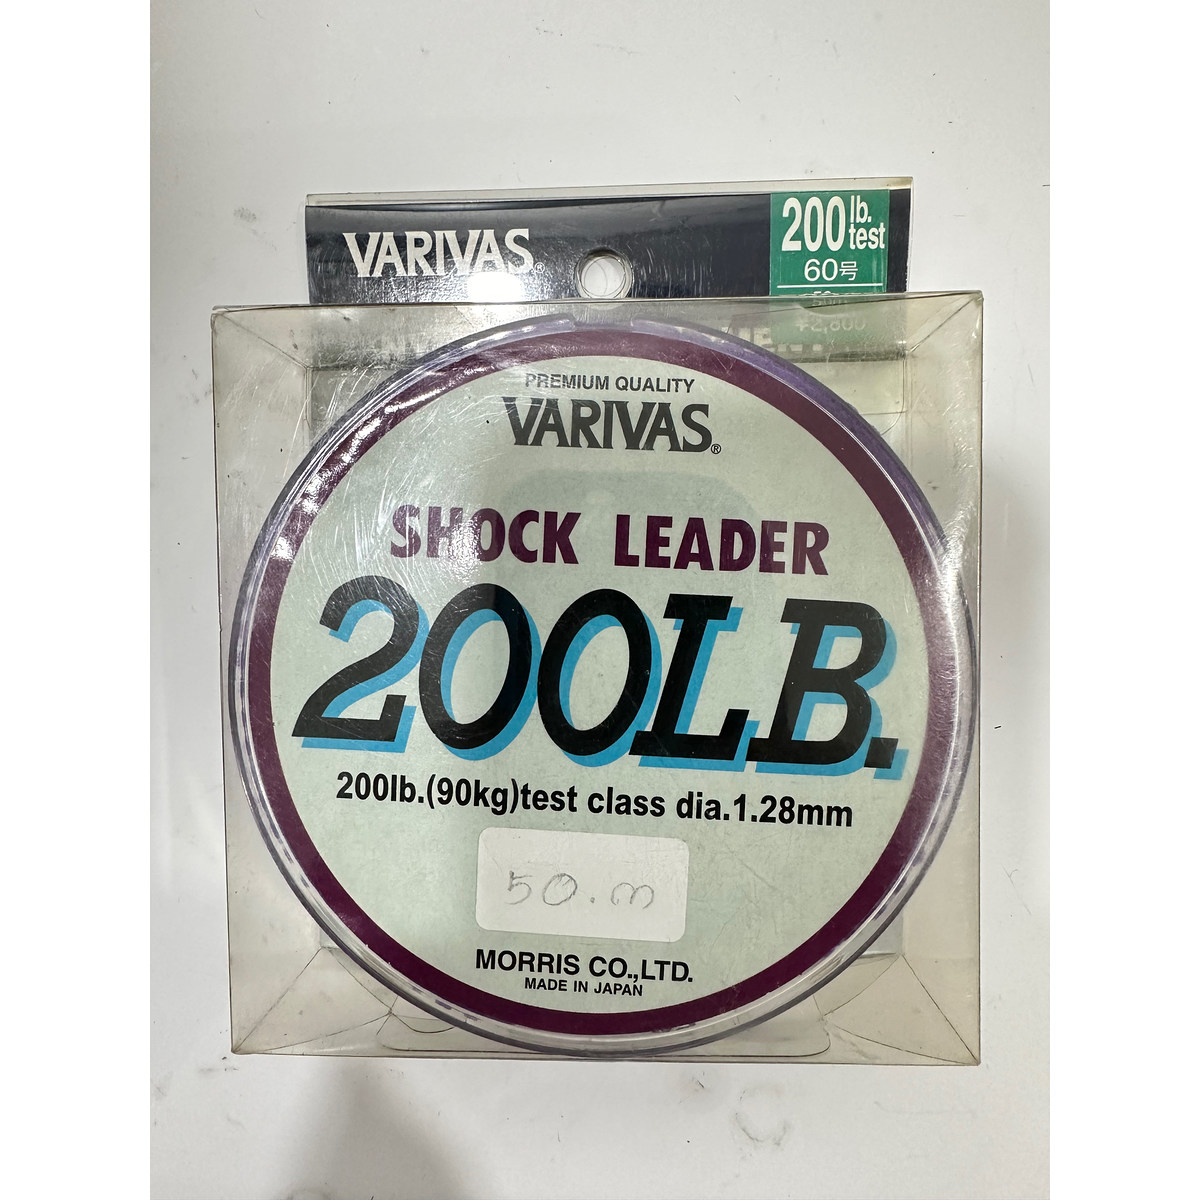 2-Shock leader VARIVAS 200lb ม้วนนี้เป็นของใหม่ไม่เคยตัดใช้งาน เต็มม้วนที่50เมตร ขายที่600บาท ค่าส่ง